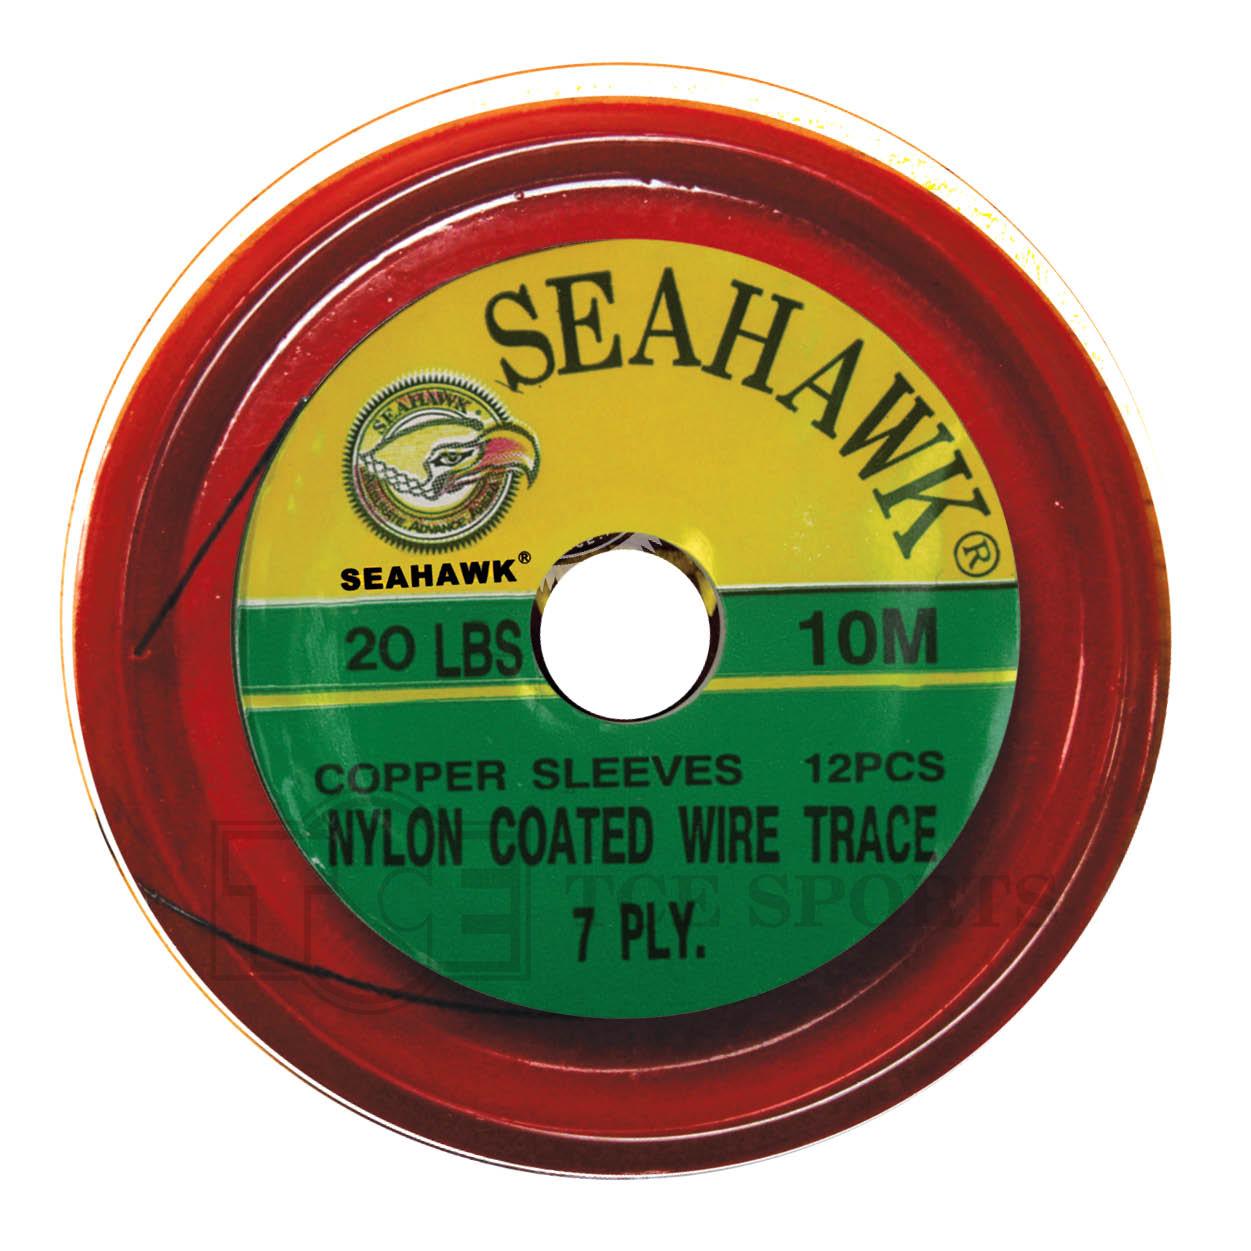 Seahawk - 10m Nylon Coated Wire - NCW Main